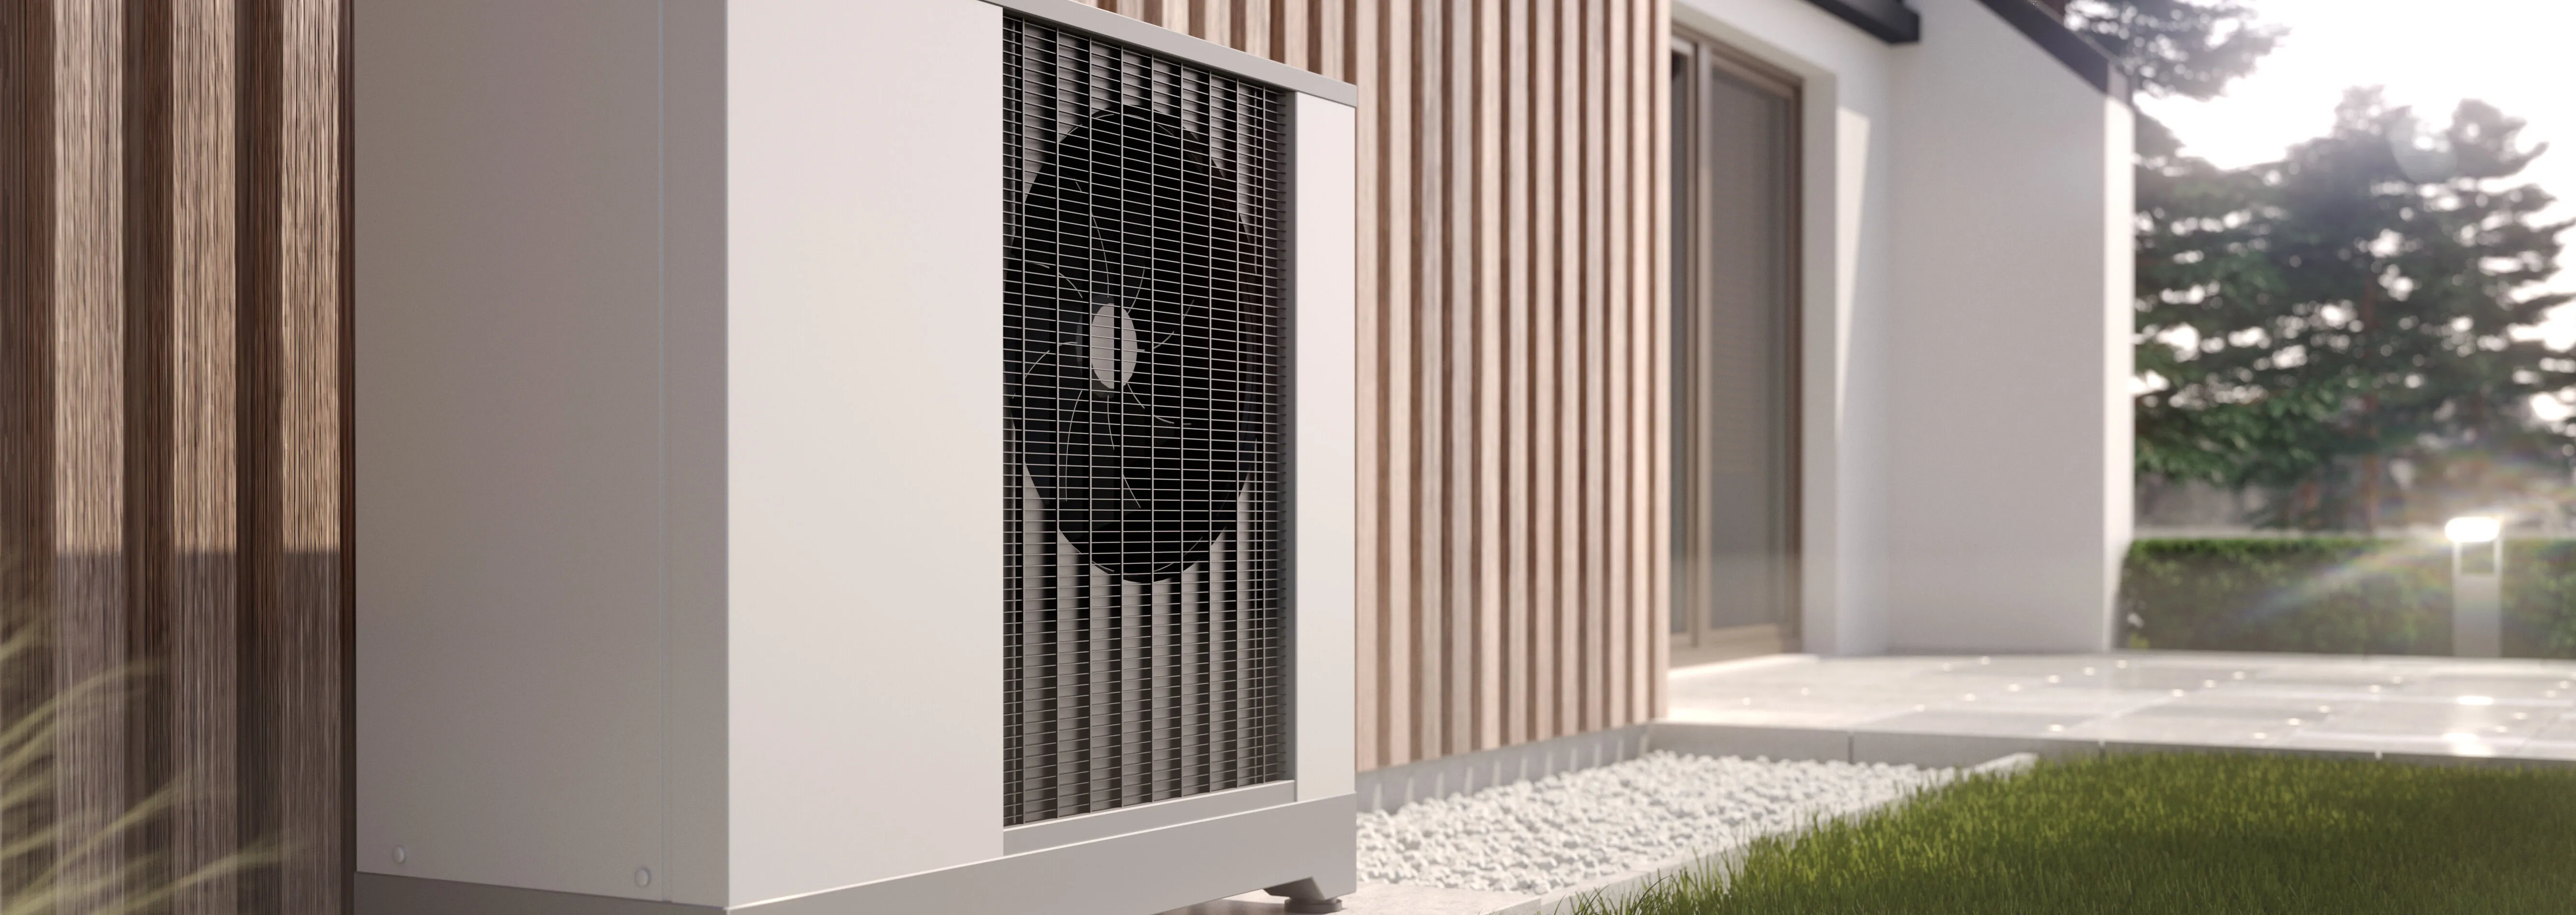 Air heat pump beside house, 3D illustration (1).jpg